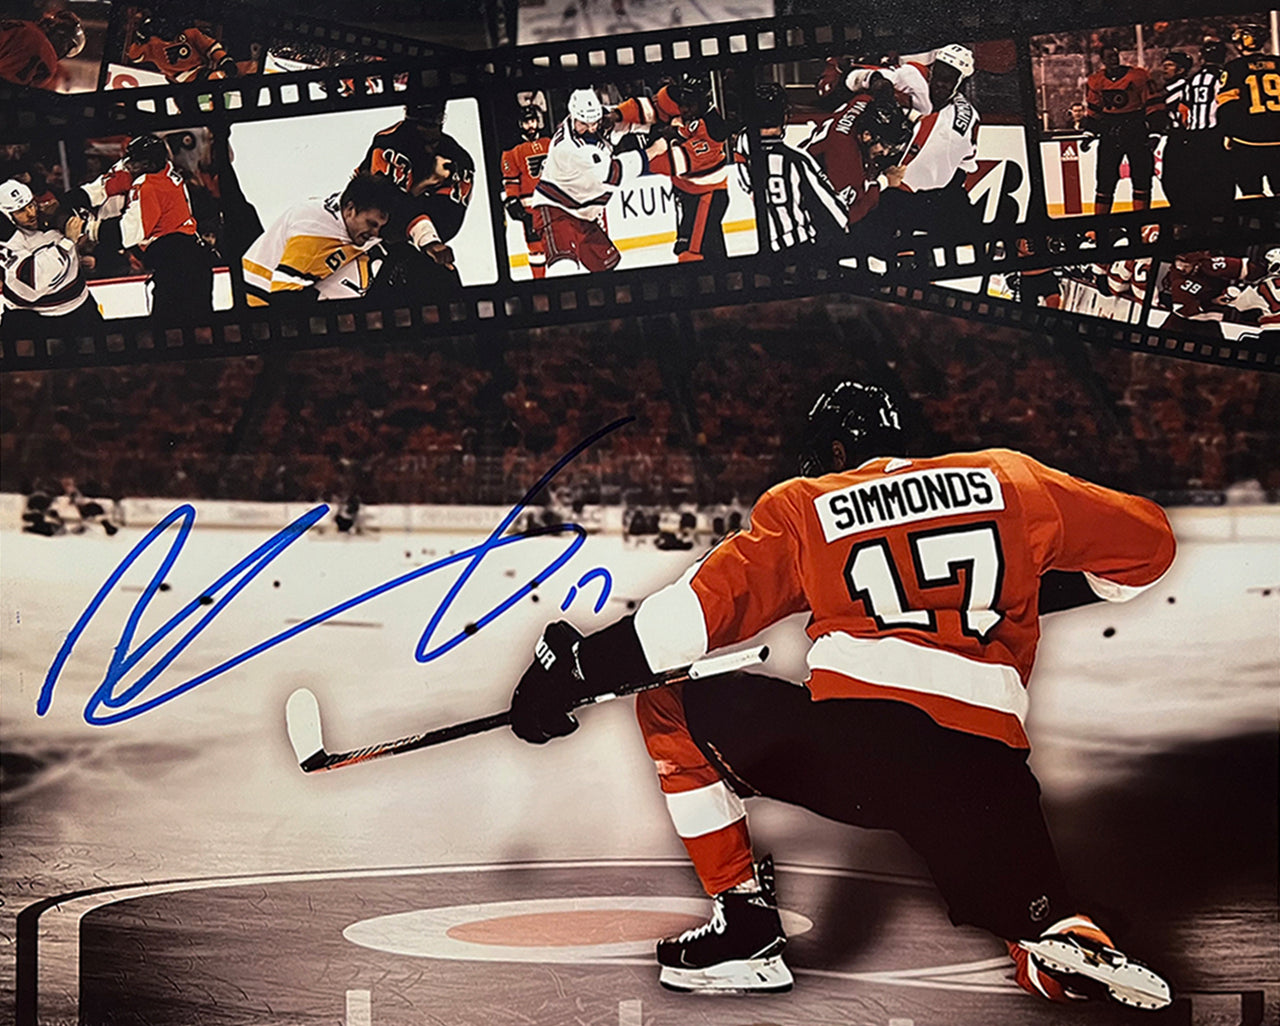 Wayne Simmonds Philadelphia Flyers Autographed 8" x 10" Collage Hockey Photo